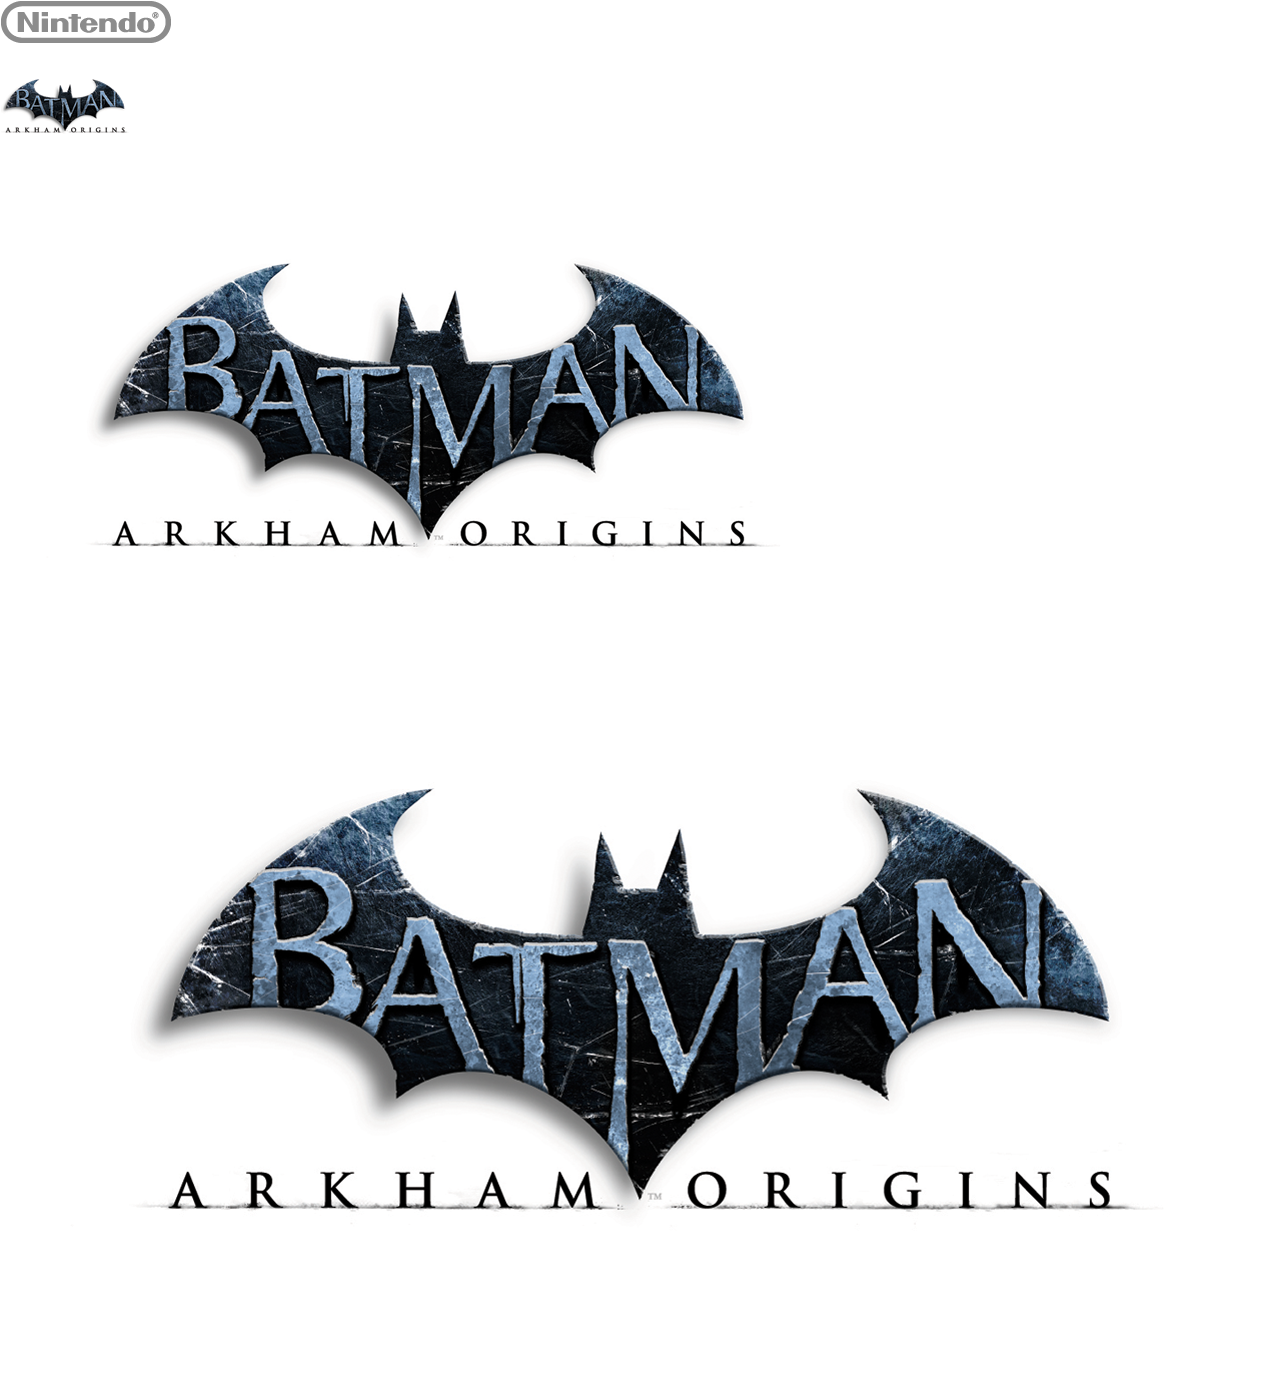 Batman: Arkham Origins - HOME Menu Icon and Banners